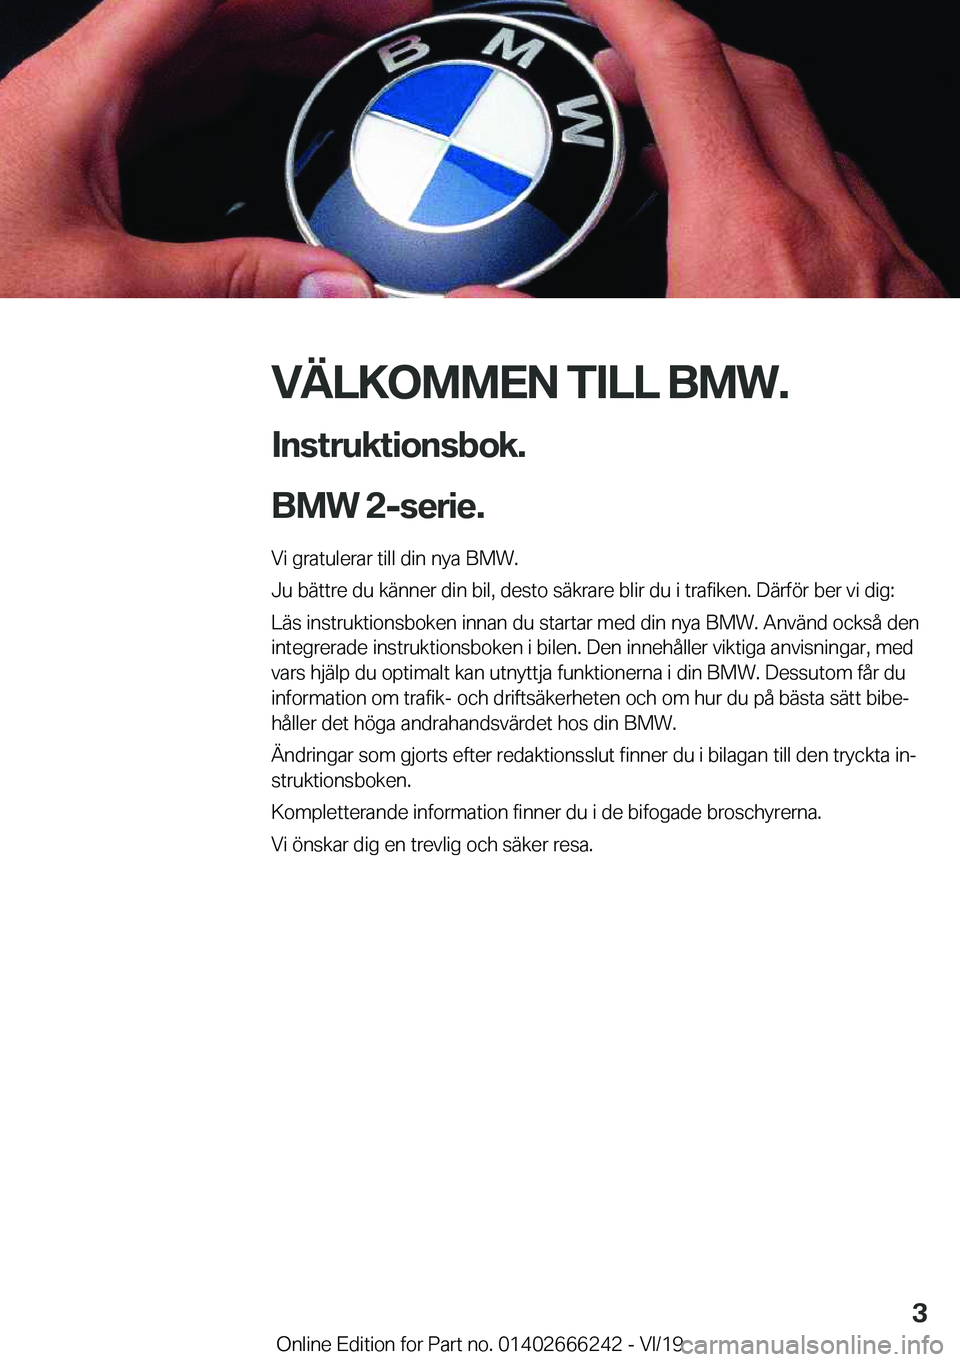 BMW 2 SERIES COUPE 2020  InstruktionsbÖcker (in Swedish) �V�Ä�L�K�O�M�M�E�N��T�I�L�L��B�M�W�.�I�n�s�t�r�u�k�t�i�o�n�s�b�o�k�.
�B�M�W��2�-�s�e�r�i�e�.�
�V�i��g�r�a�t�u�l�e�r�a�r��t�i�l�l��d�i�n��n�y�a��B�M�W�.
�J�u��b�ä�t�t�r�e��d�u��k�ä�n�n�e